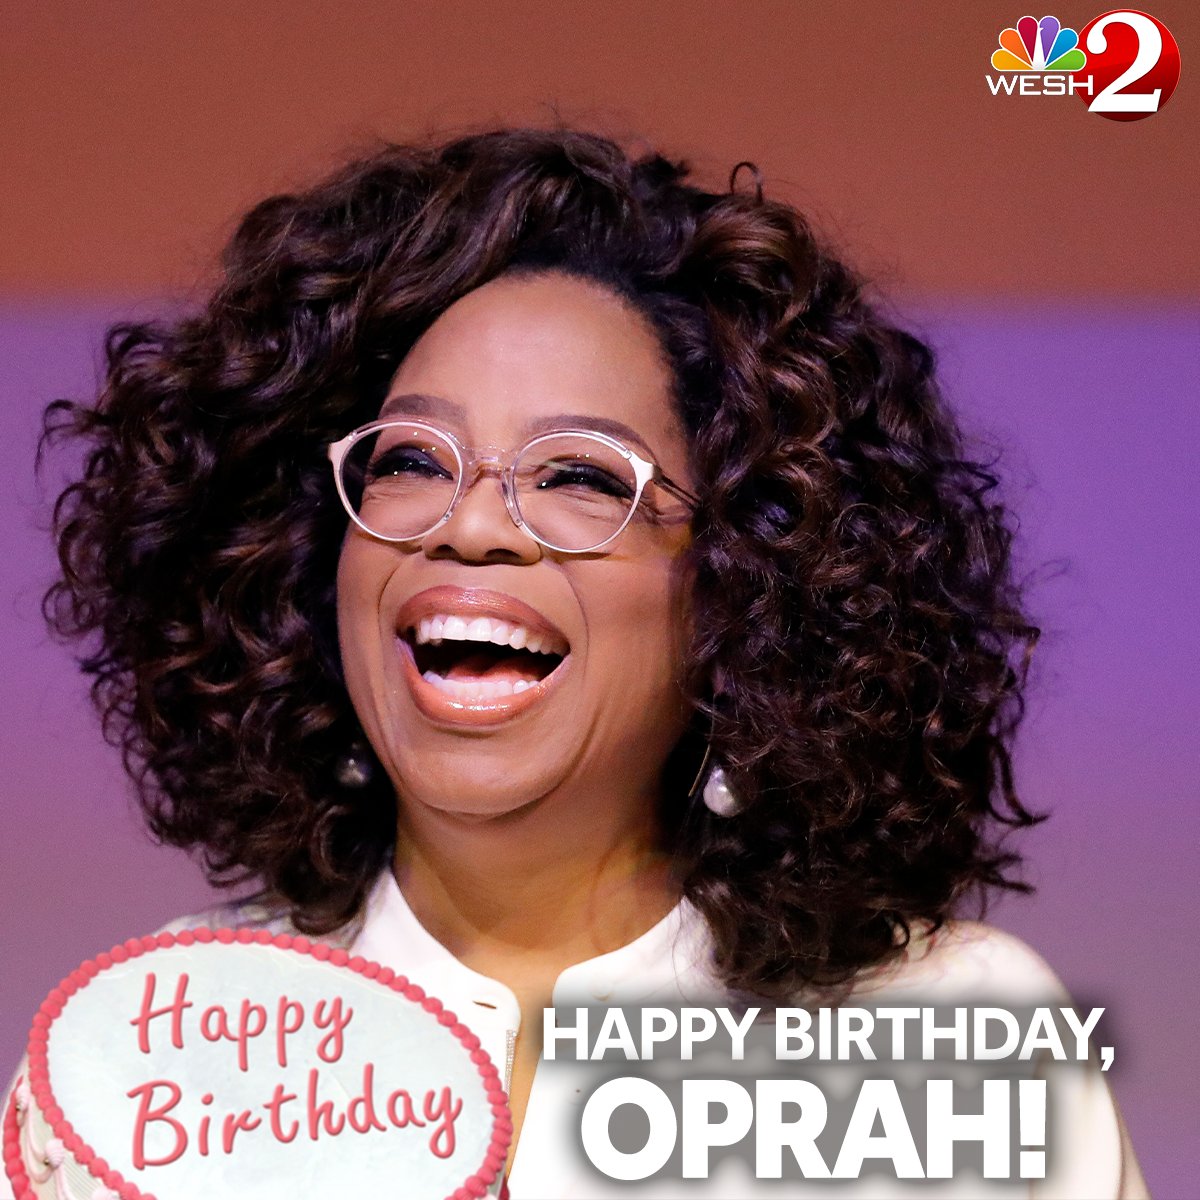    HAPPY BIRTHDAY, OPRAH! Join us in wishing Oprah Winfrey an amazing 66th Birthday! 